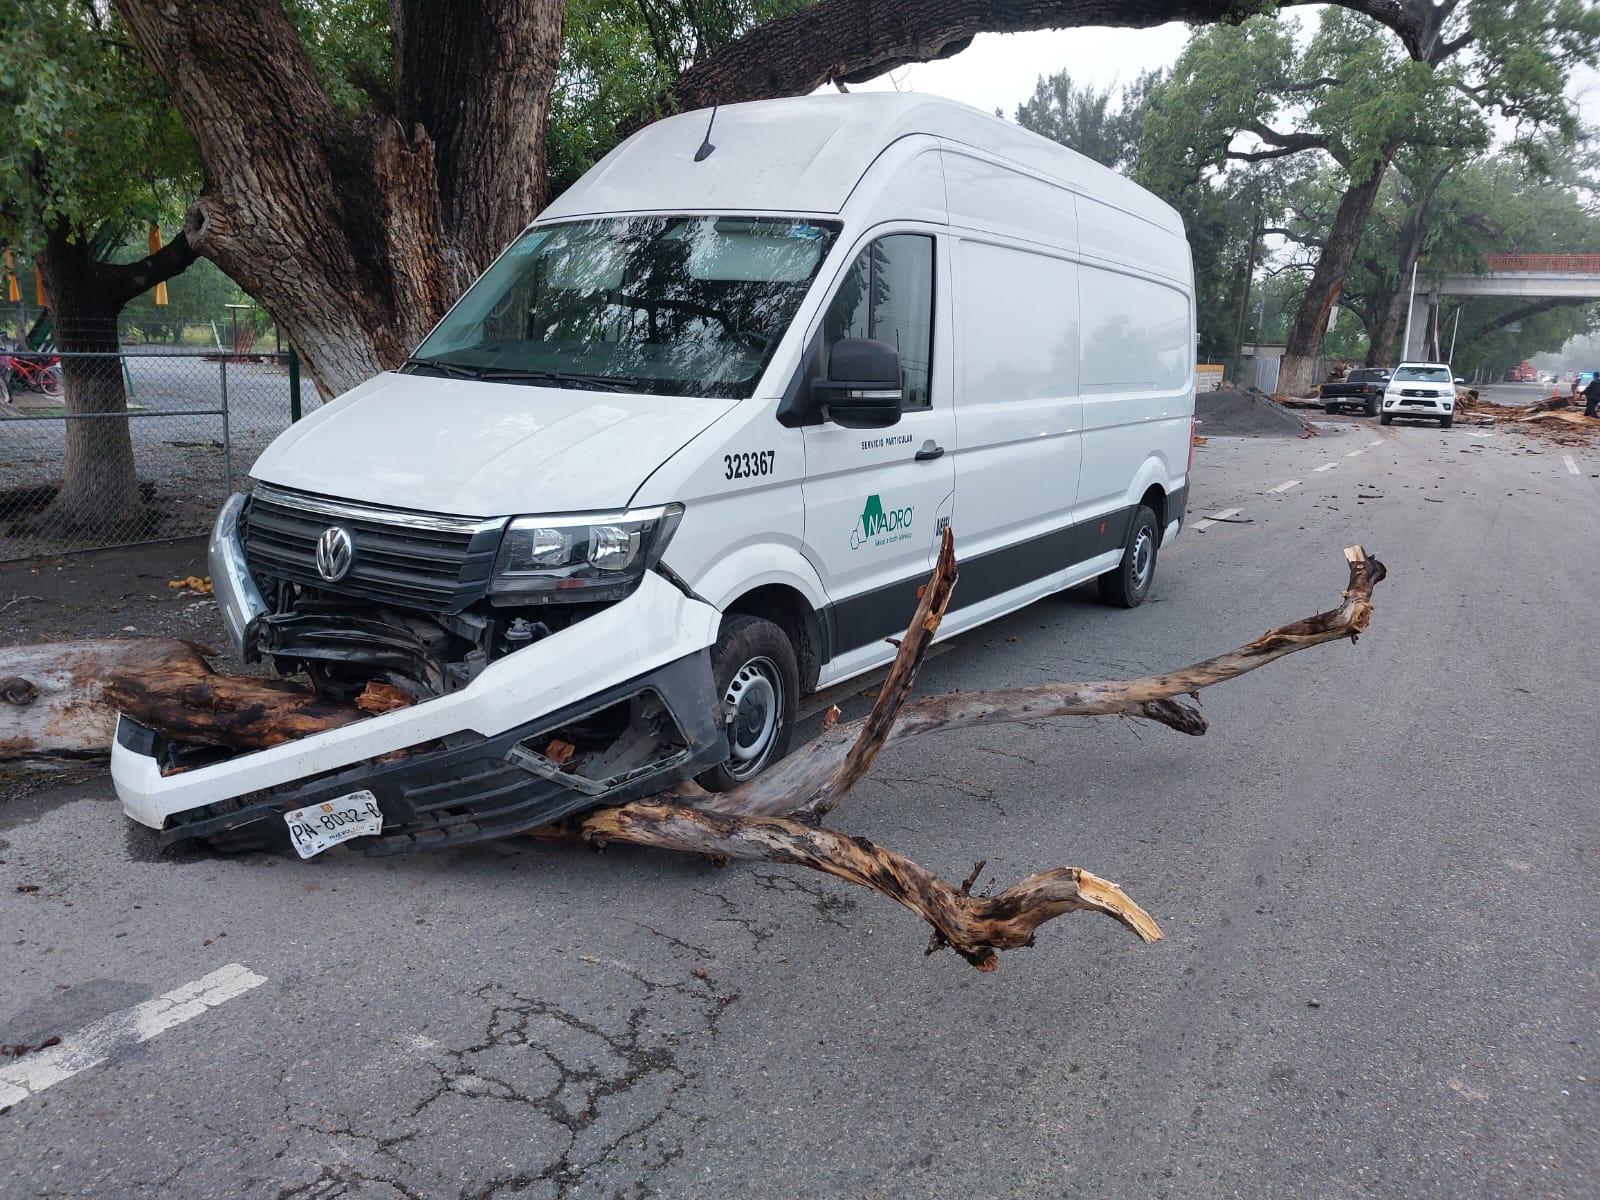 Camioneta que impactó la rama del árbol en la carretera Victoria - Monterrey. Foto: SSPT